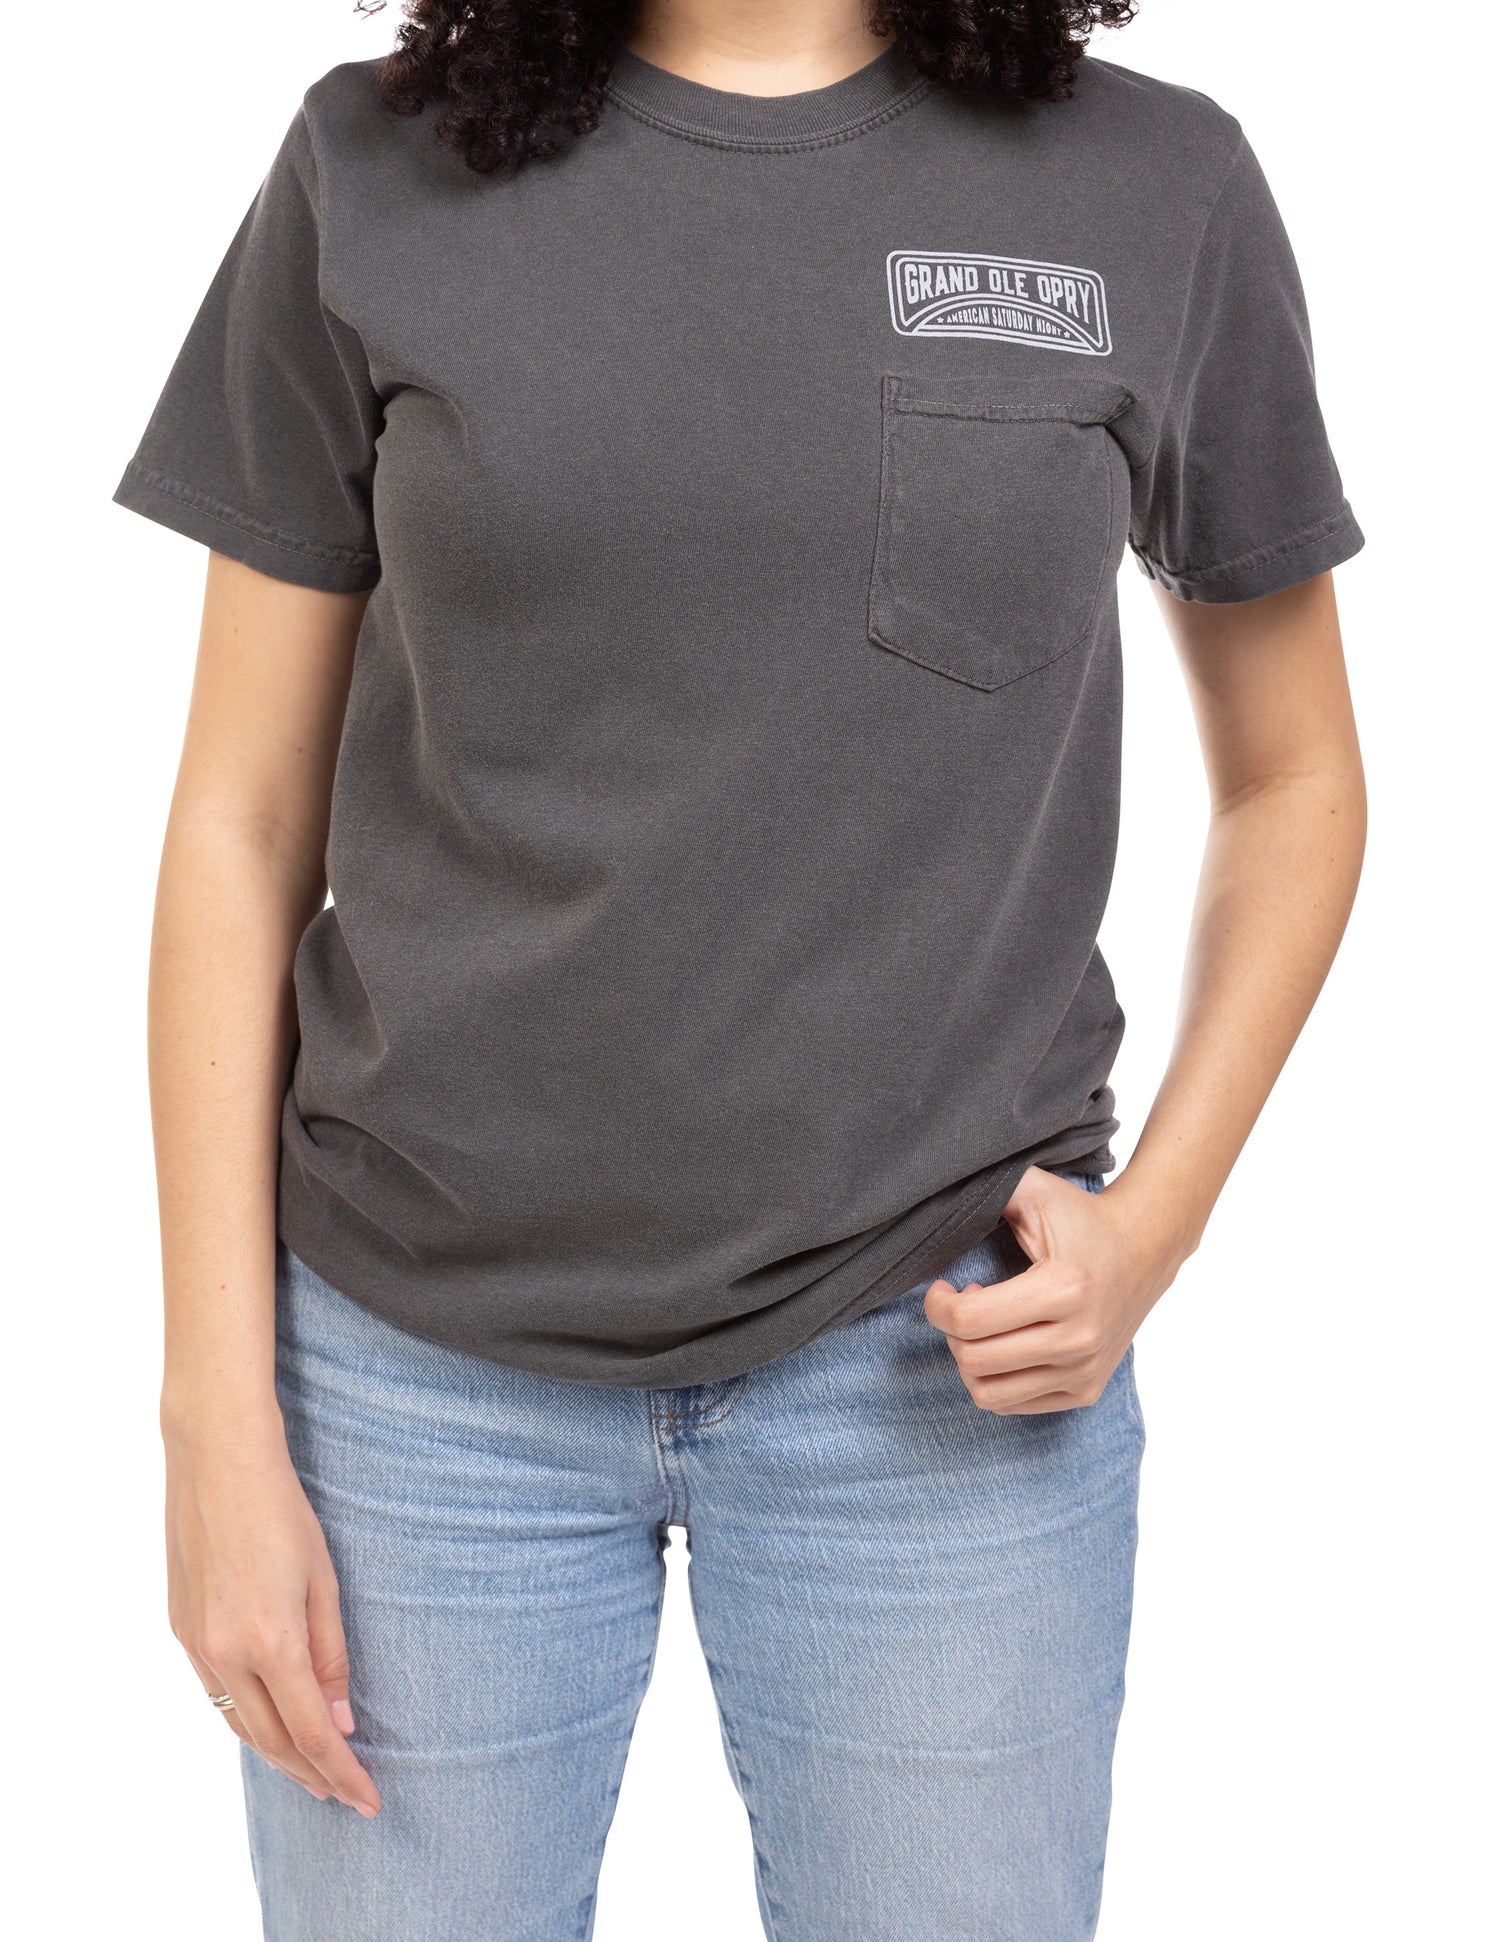 Opry Barn Pocket T-Shirt